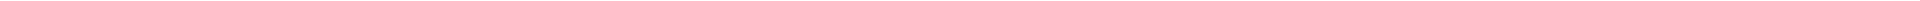 Виниры на зубы – цены в Казахстане Алматы, Астане, Усть-Каменогорске, Атырау, Уральск, Кокшетау в Казахстане, фото 20